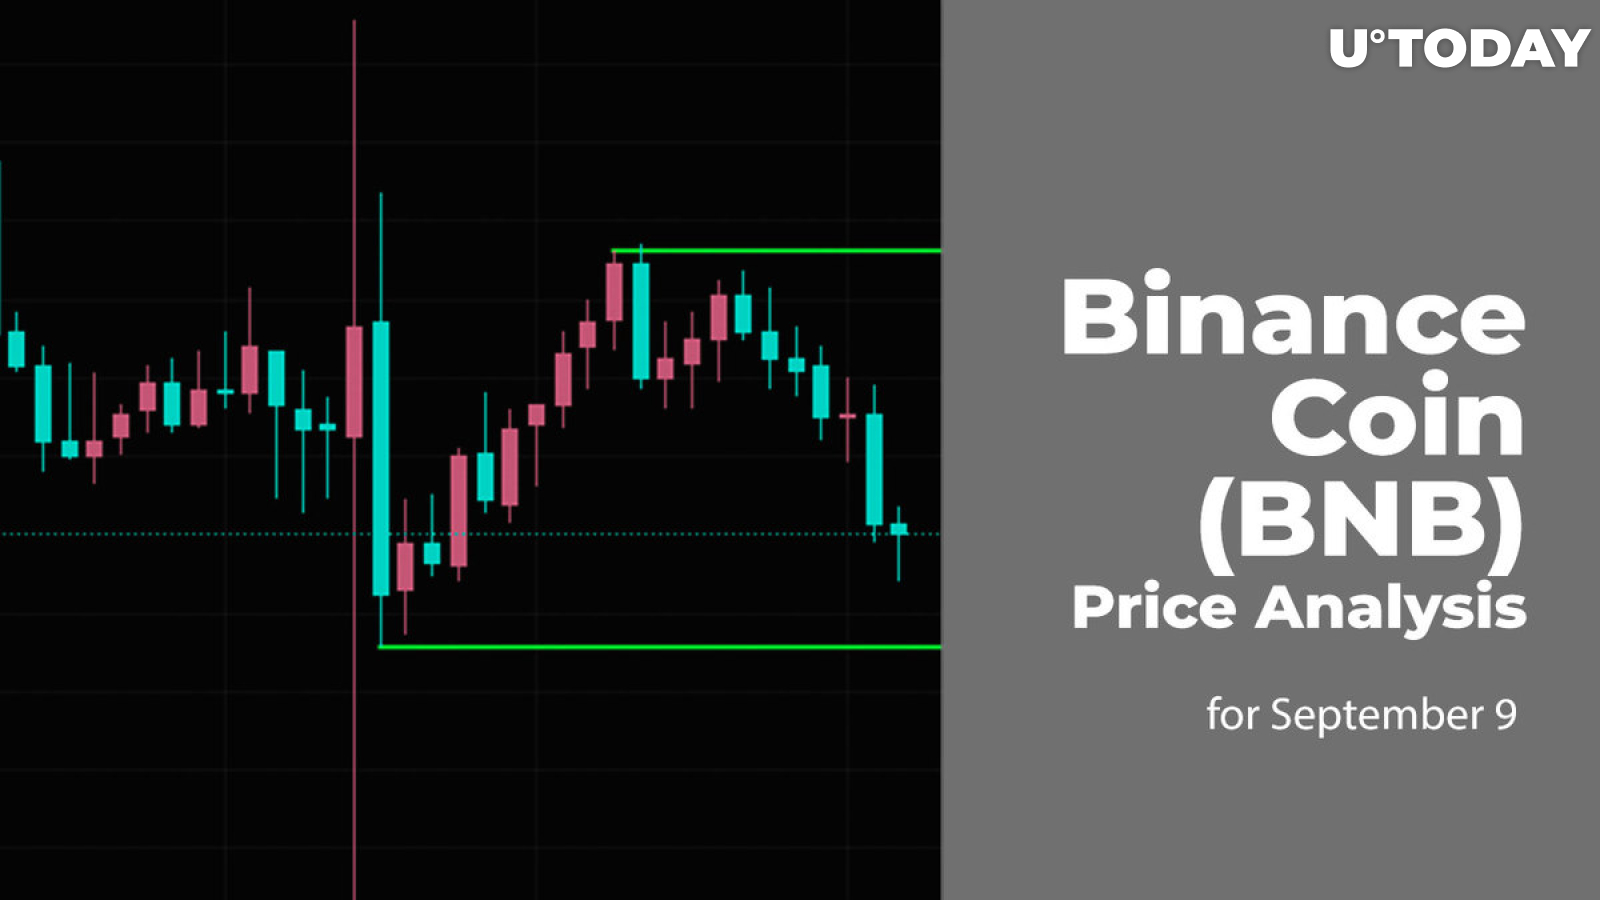 Binance Coin (BNB) Price Analysis for September 9